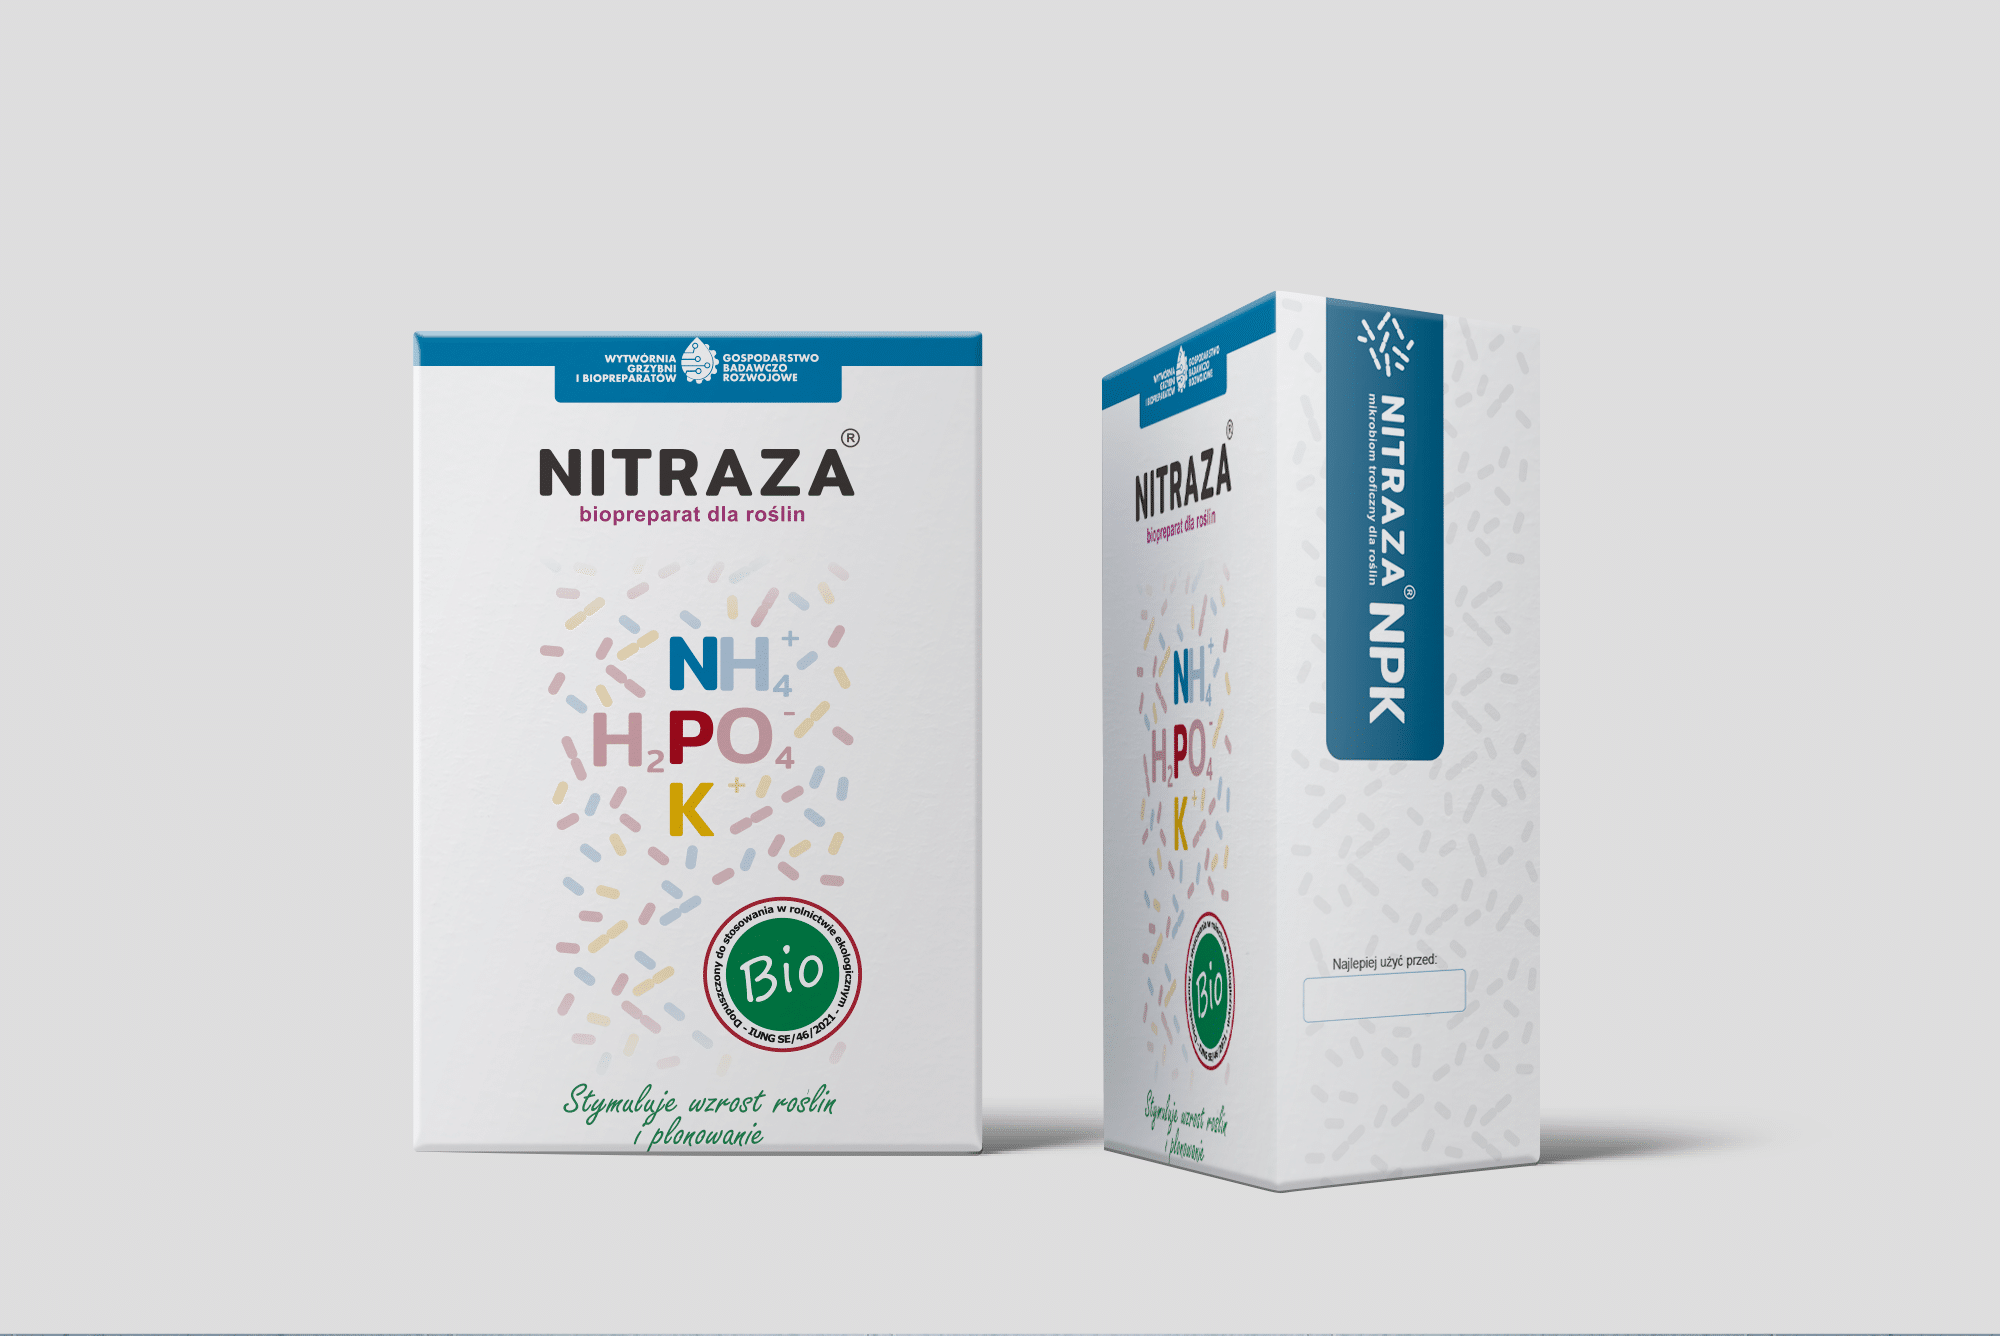 nitraza n 1